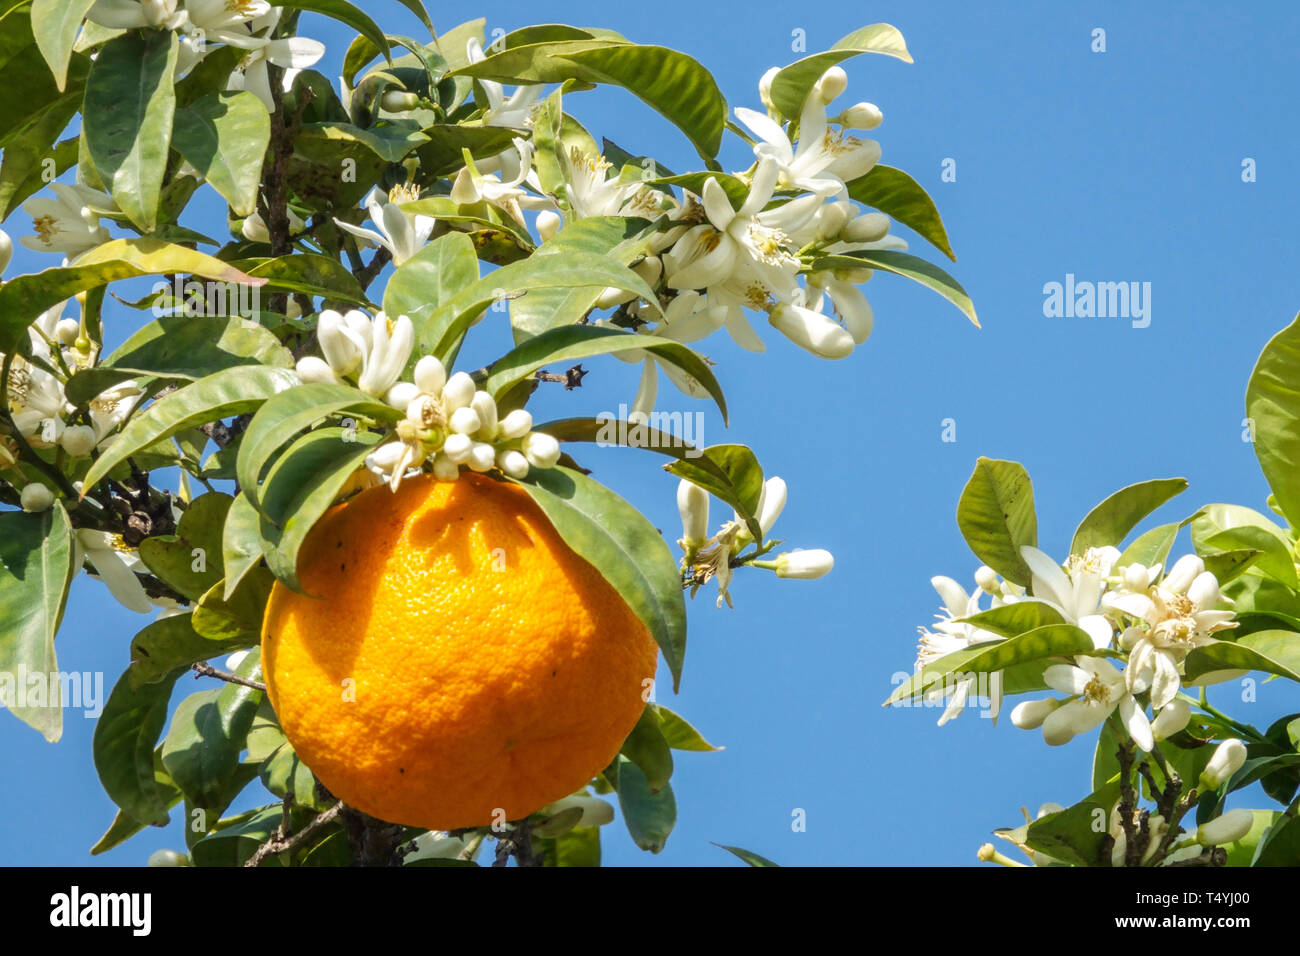 Orange blossom Spain Valencia oranges flower Spanish sunshine orange tree blossoms and fruit, white flowers Stock Photo